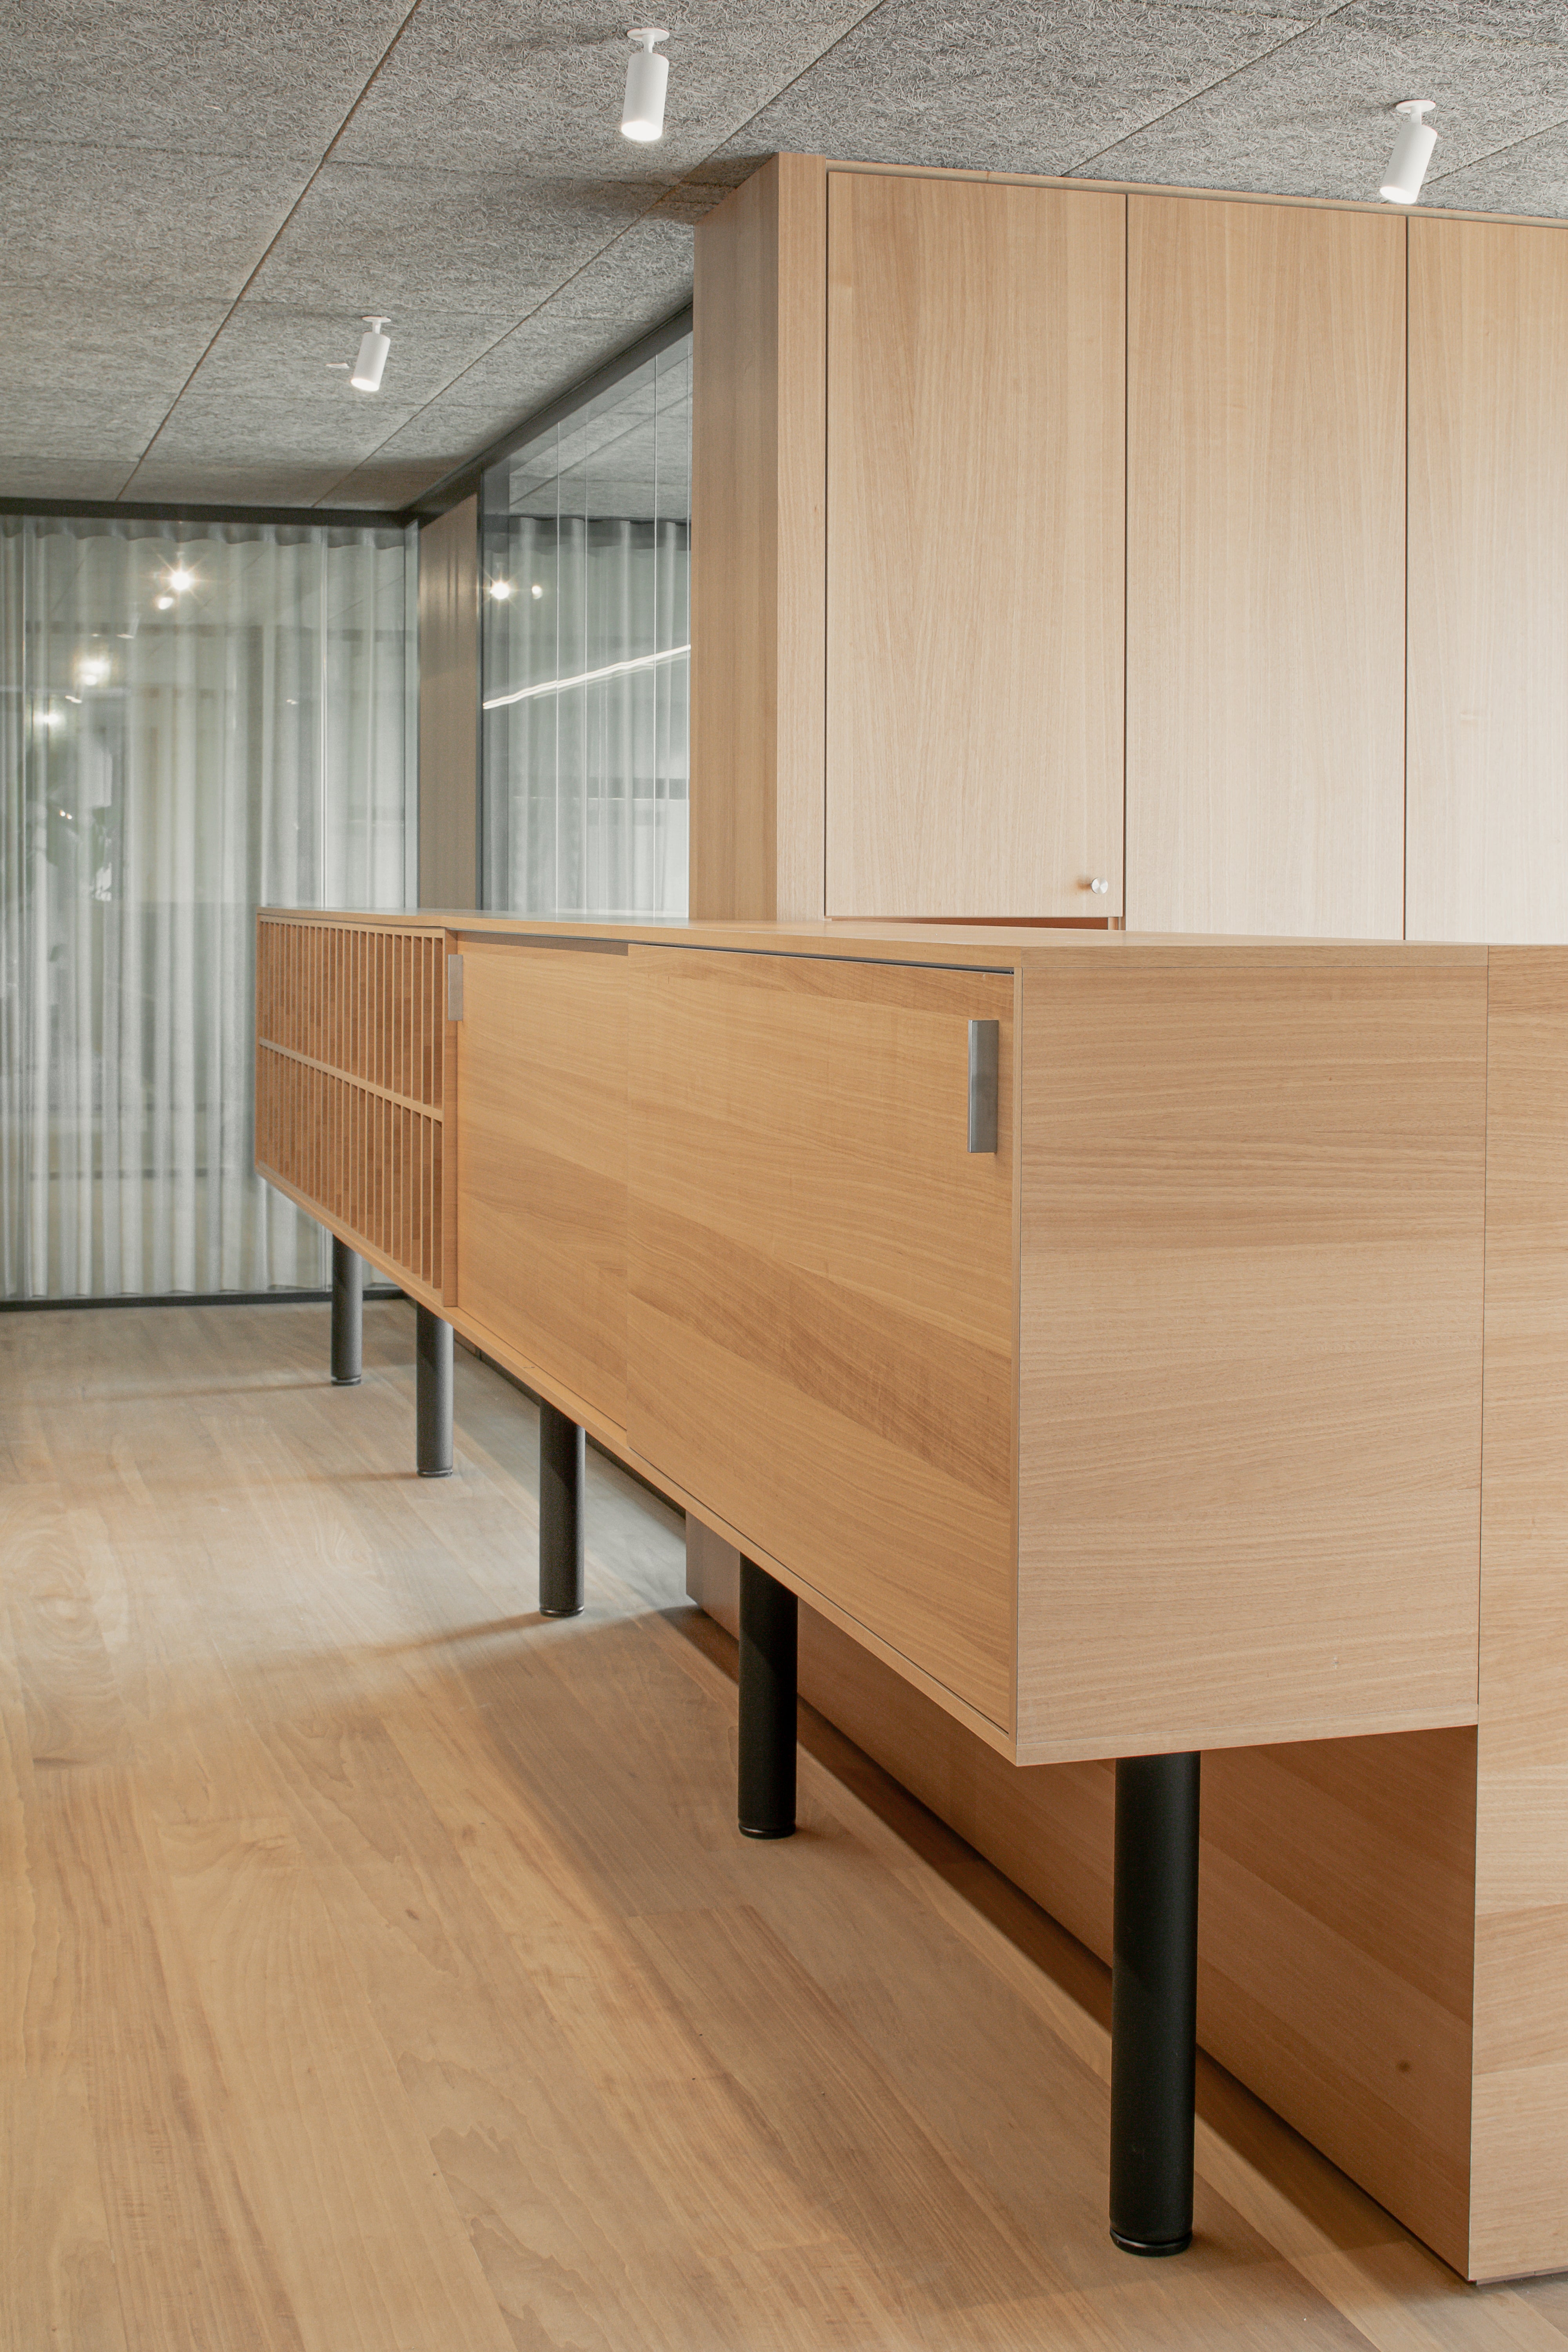 Wood cabinets - total wood solutions - aniegré - wood veneer - floor - smooth wooden floor - aniegré floor